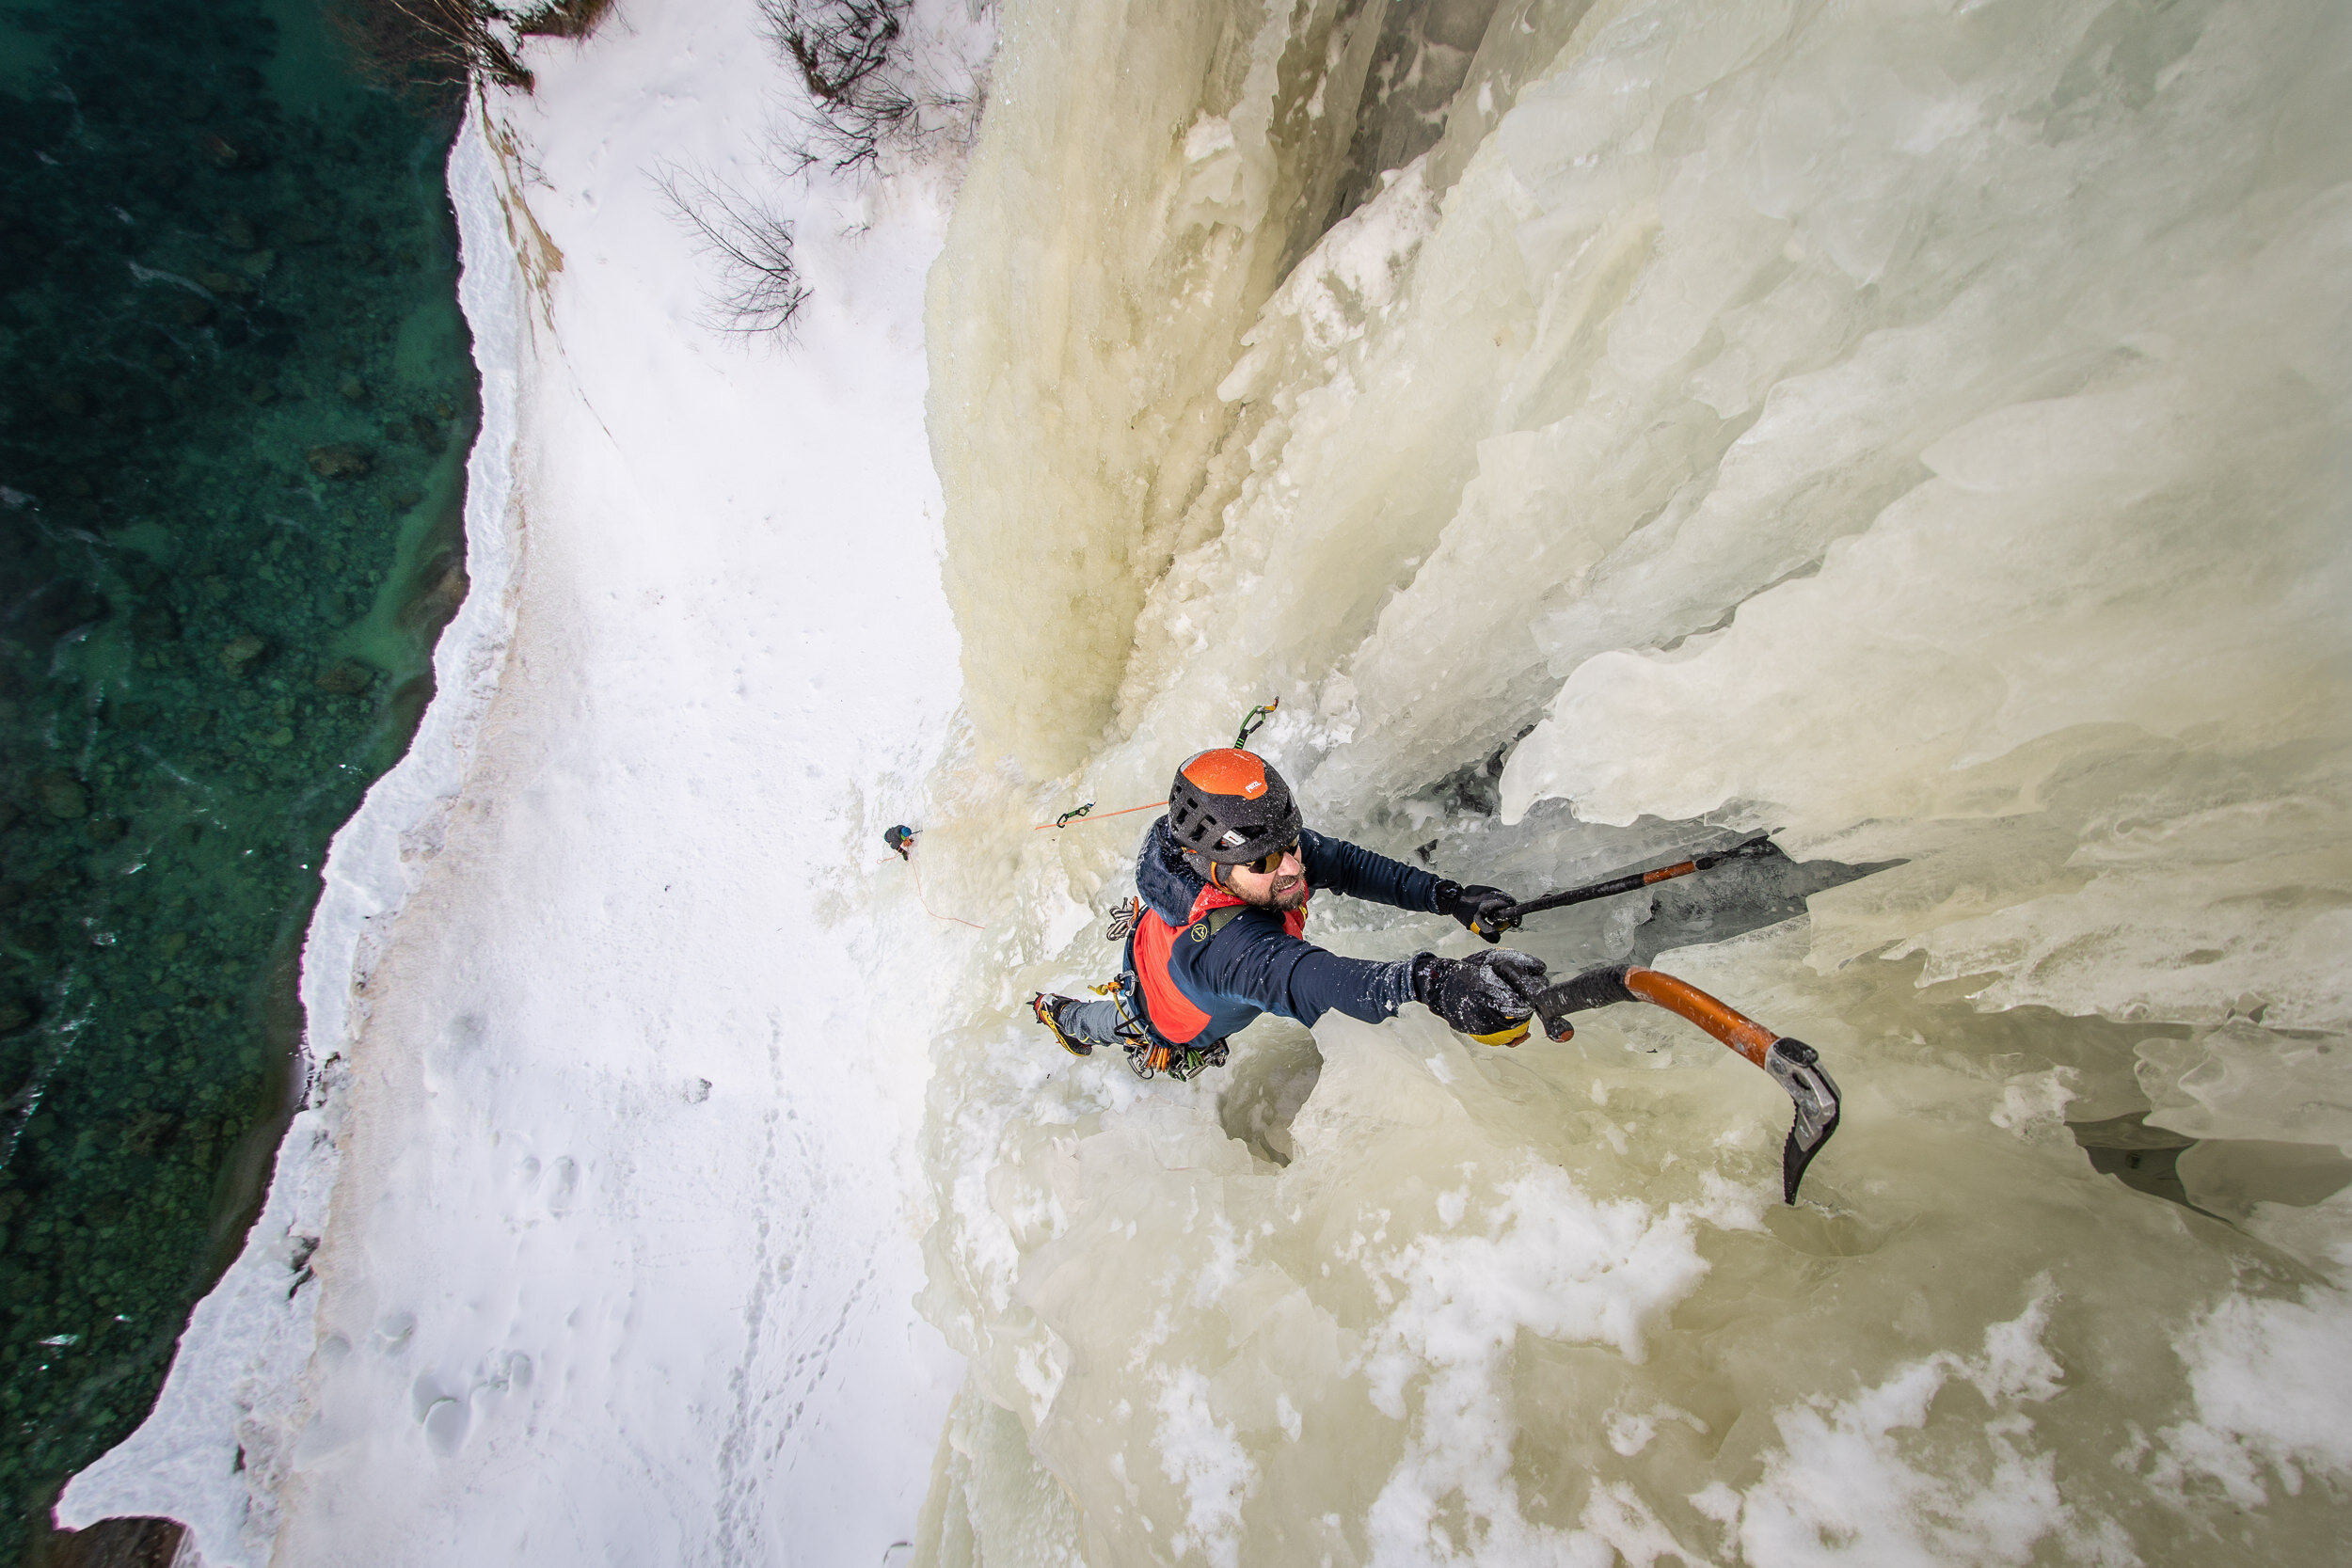  Ari Novak ice climbing on Dairyland at the Pictured Rocks National Lakeshore in Michigan. 